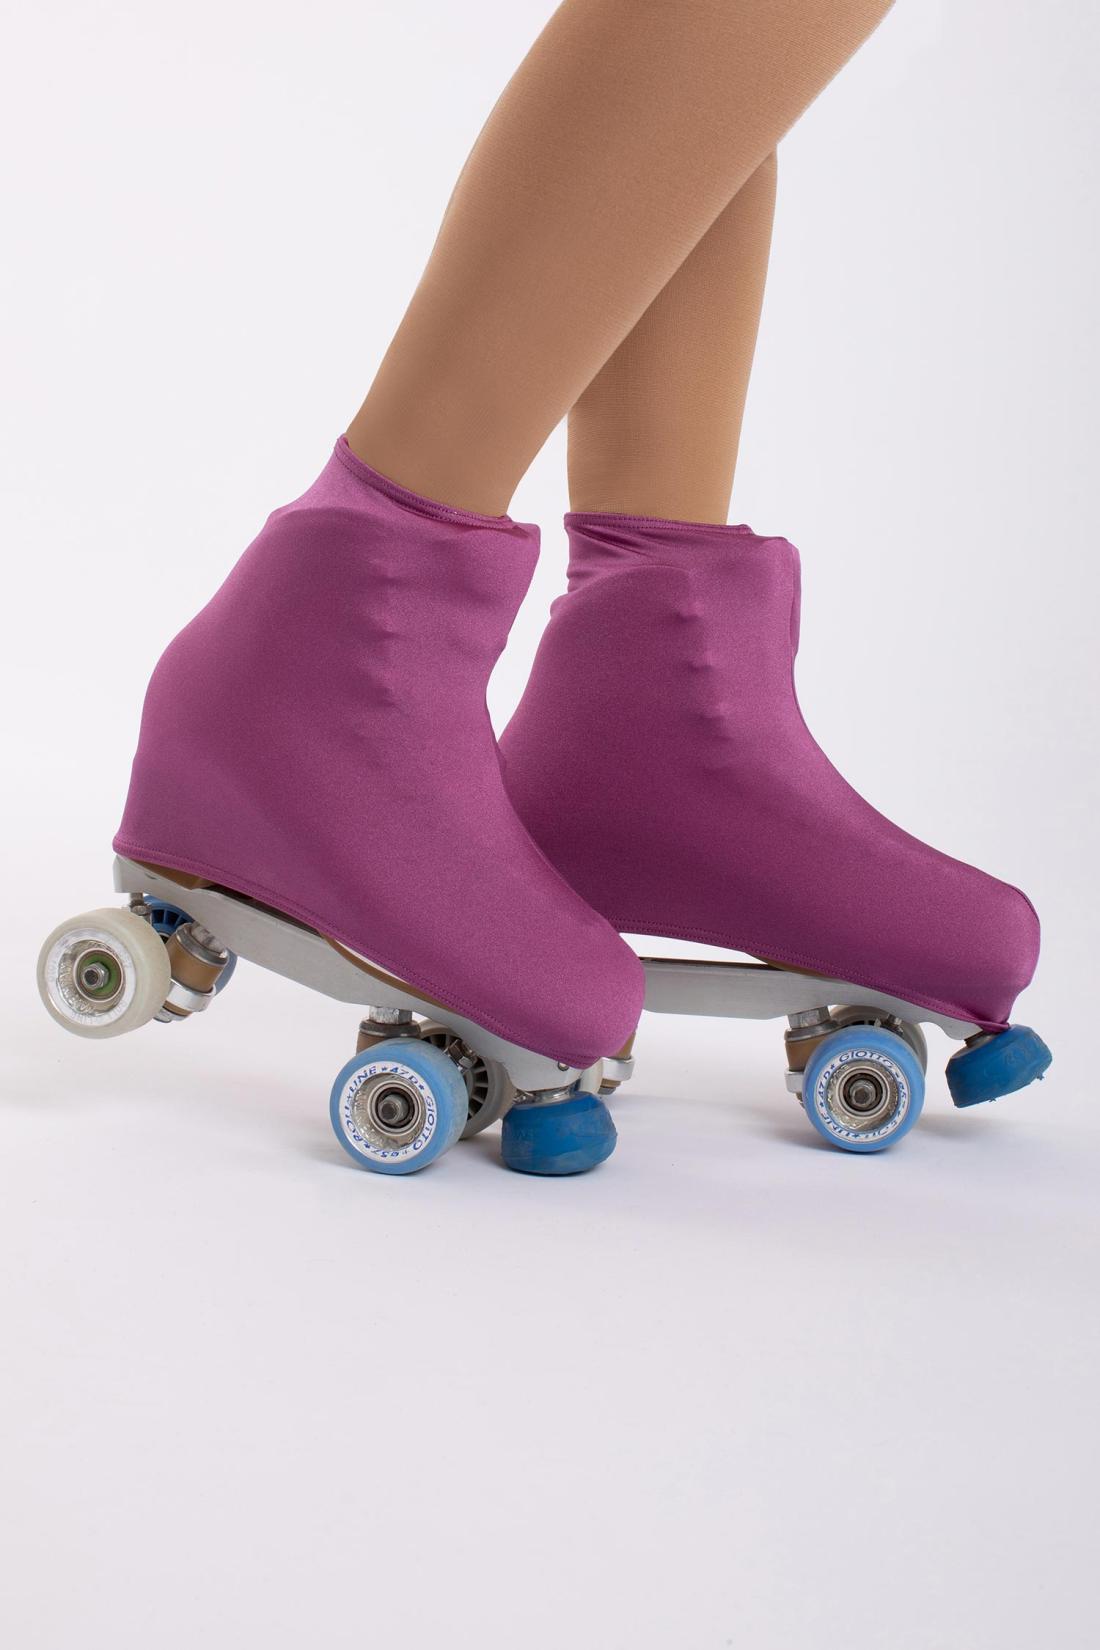 Figure Skating boot covers shiny Lycra fabric Intermezzo Dance